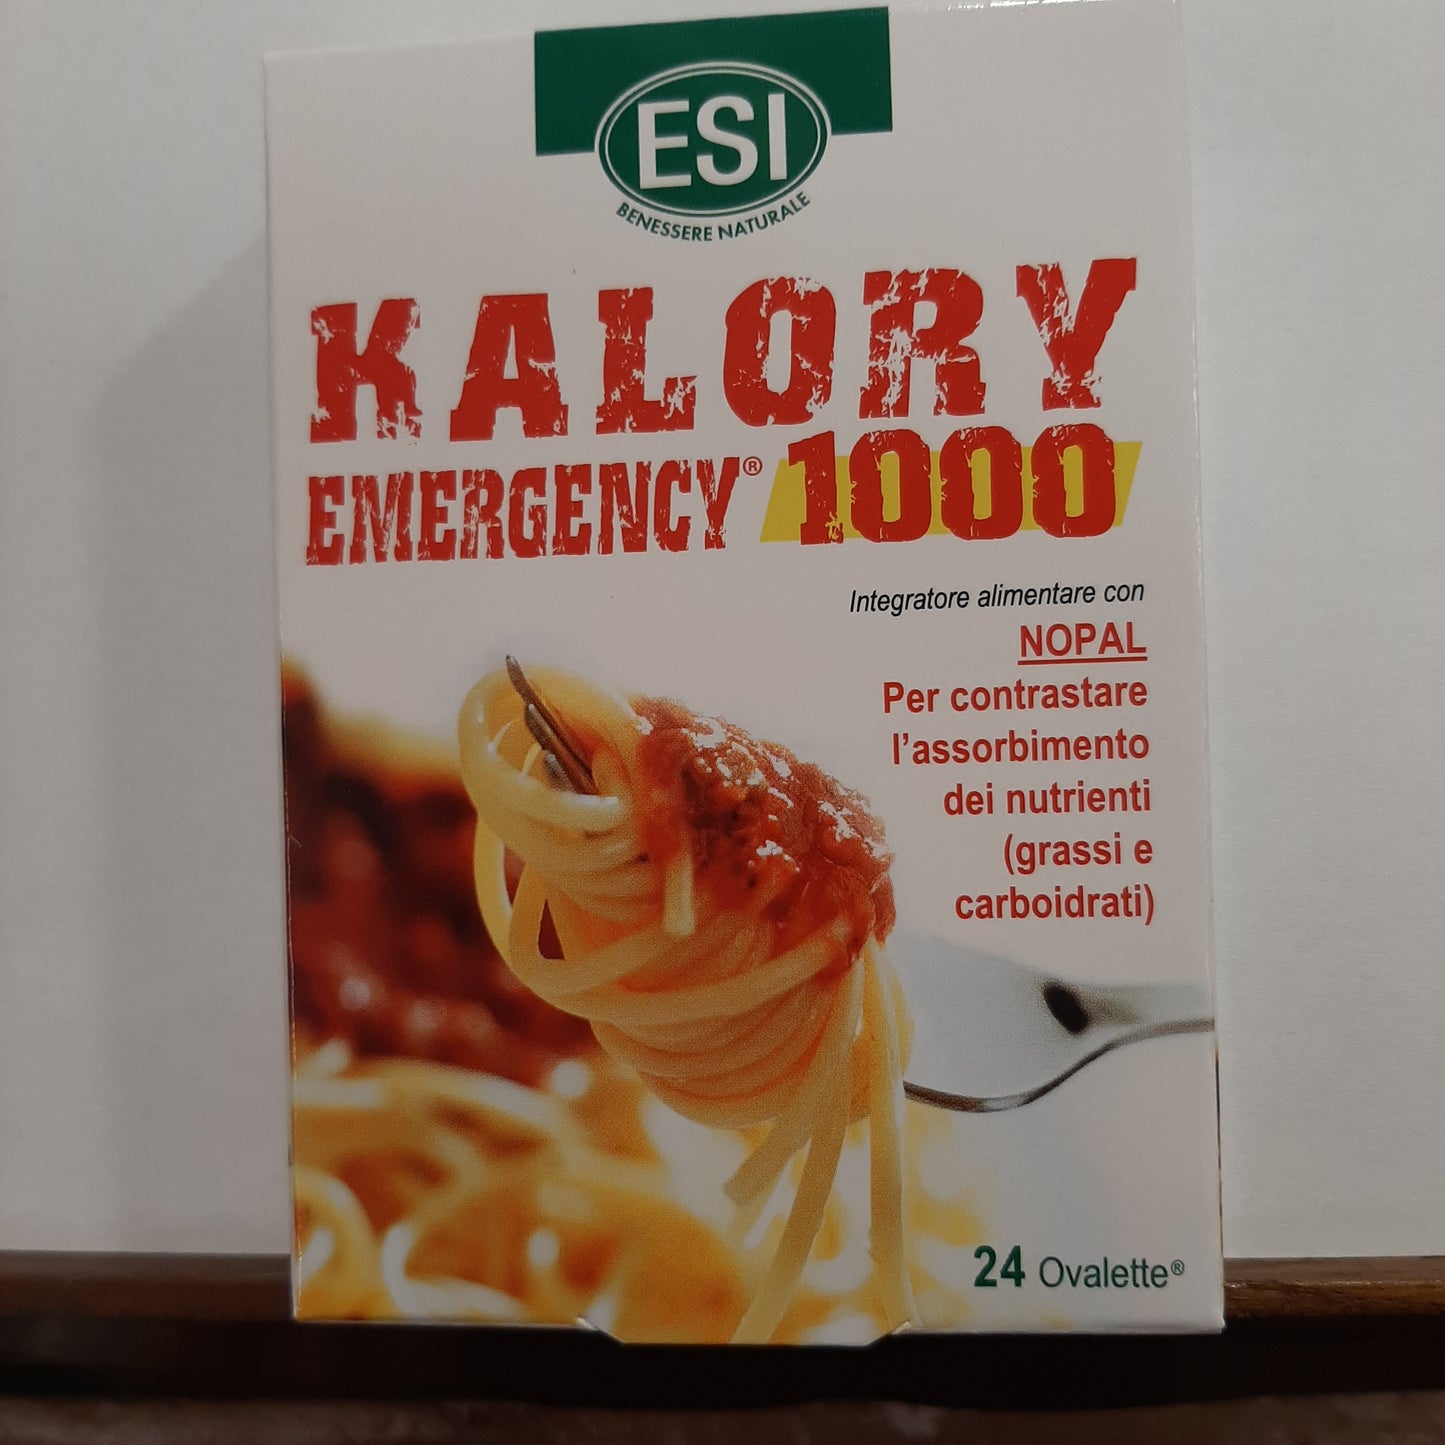 Integratore alimentare con nopal Kalory emergency 1000 g19,2 24 ovalette scad 04/2026 Esi